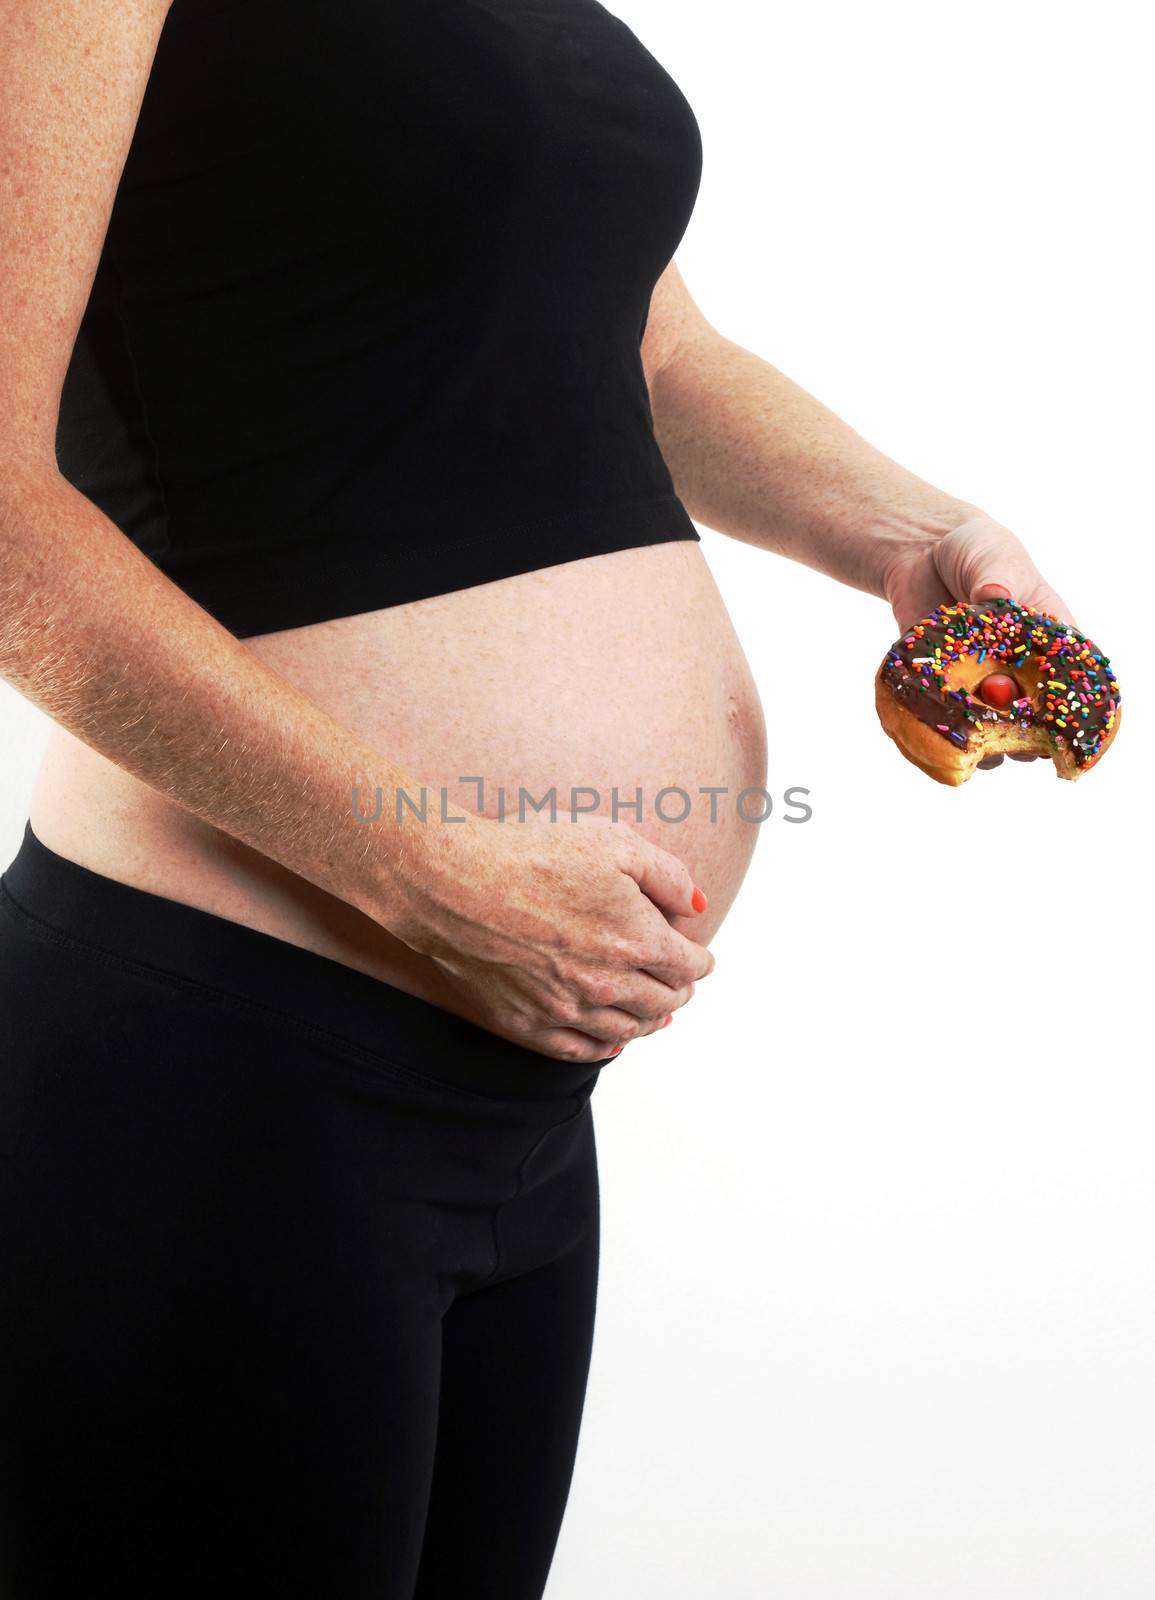 pregnancy craving by ftlaudgirl